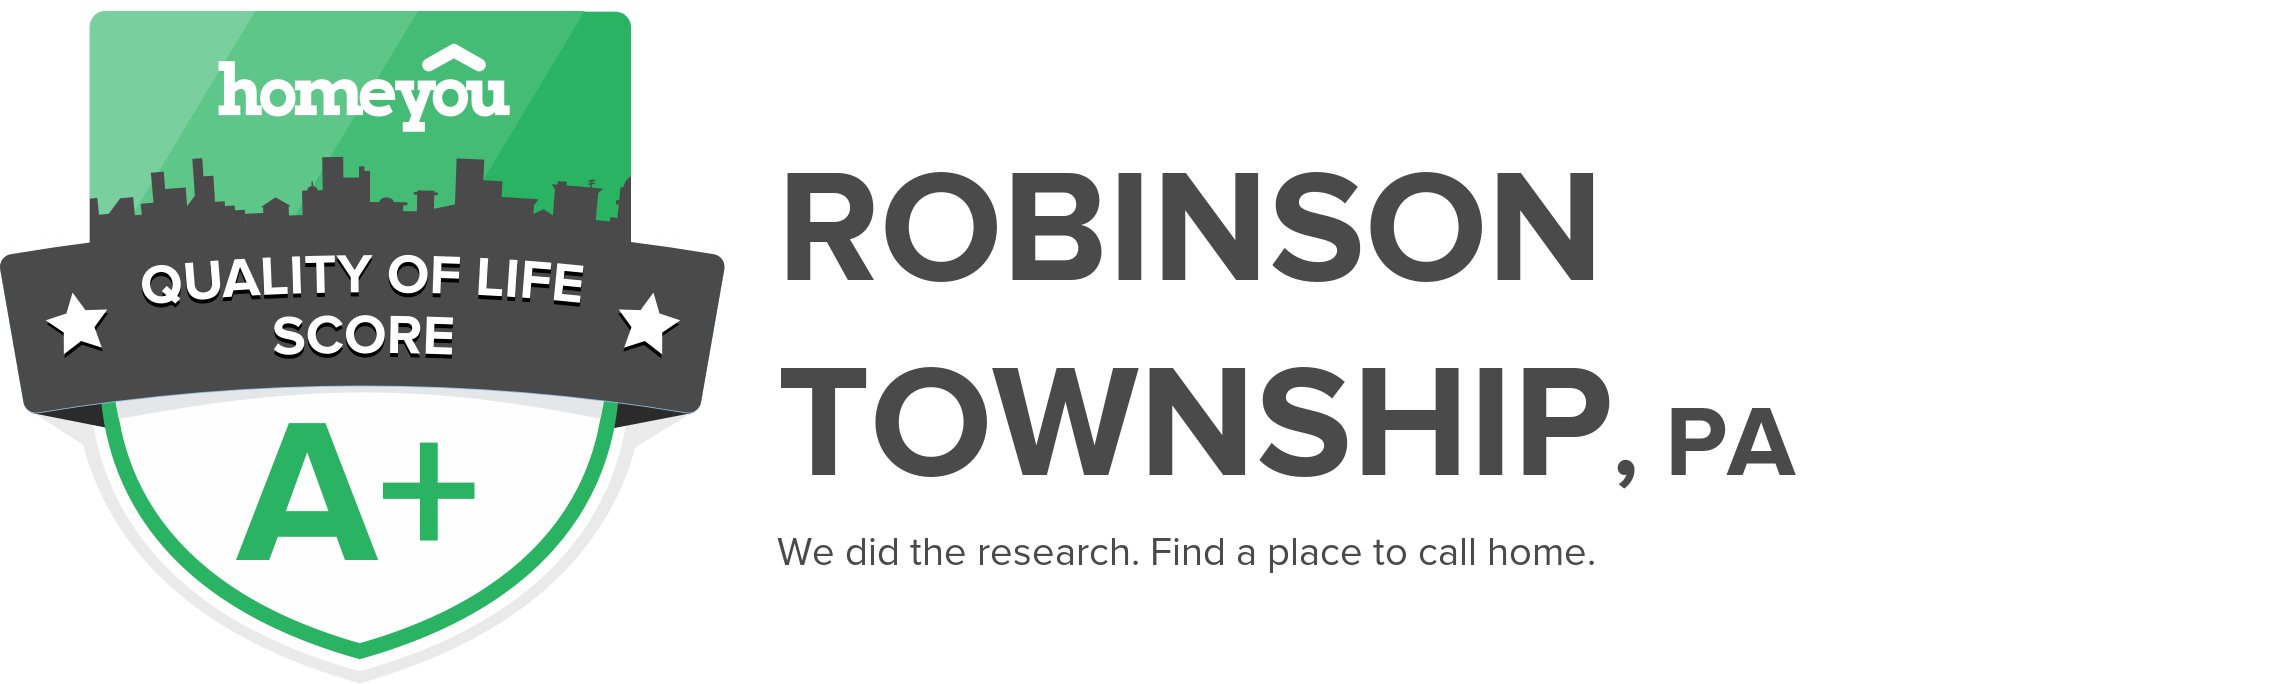 Robinson Township, PA